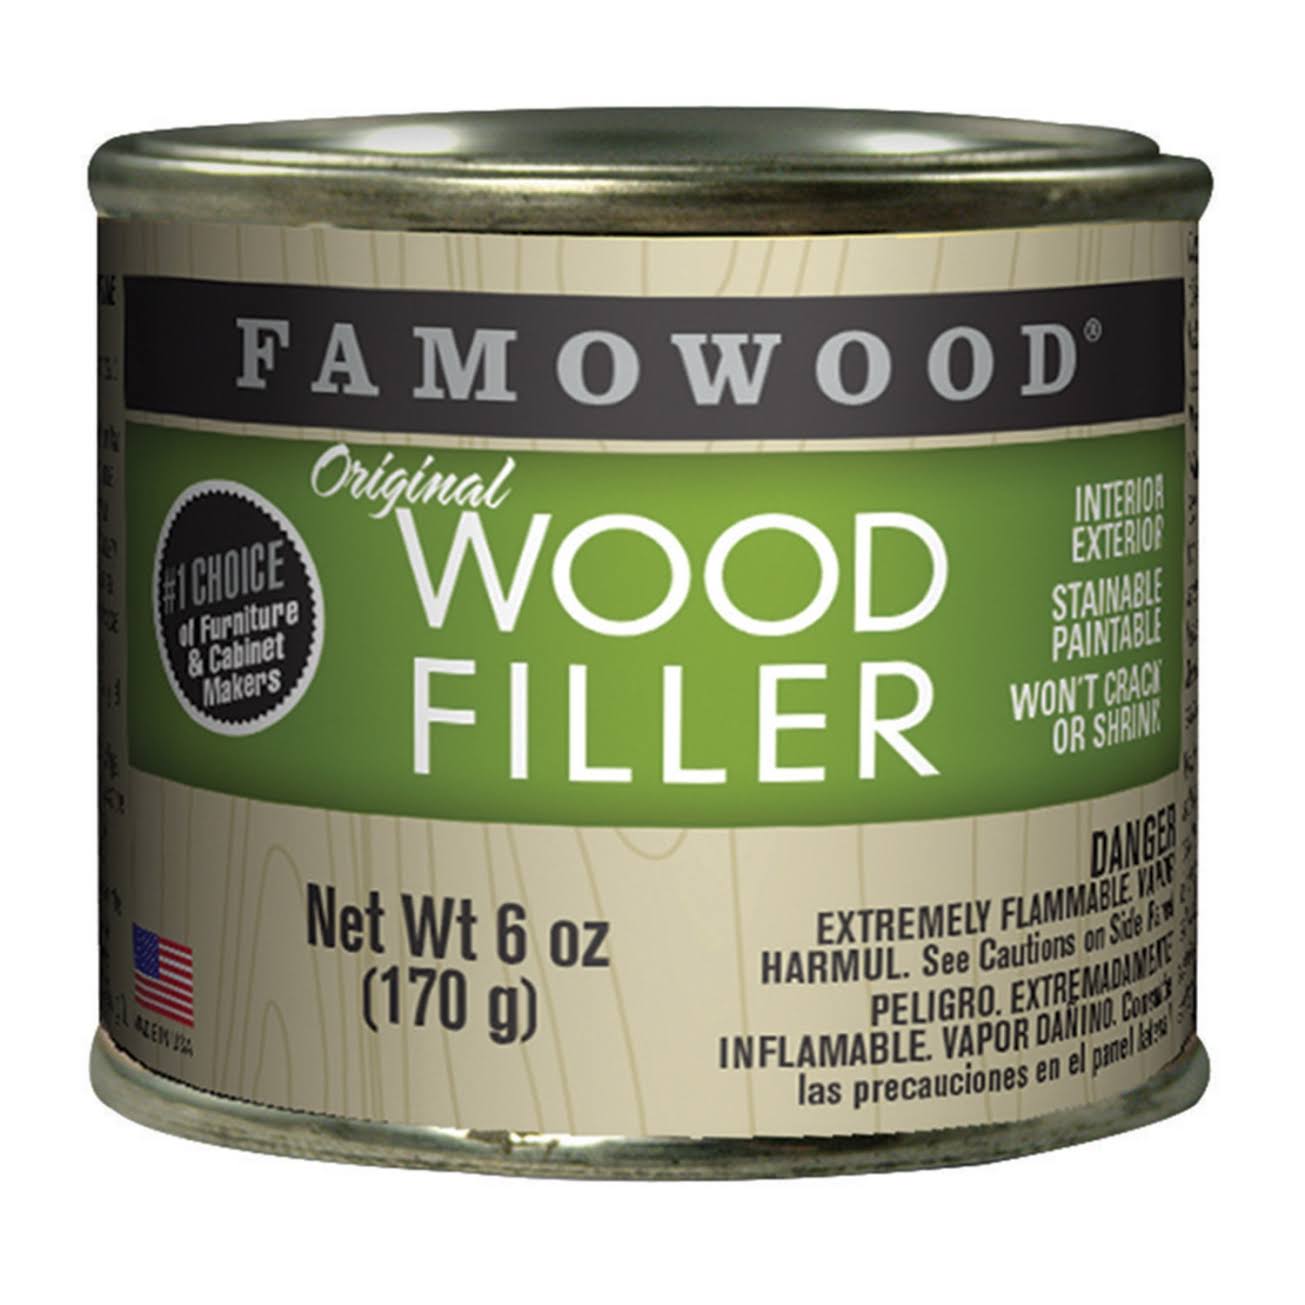 FamoWood Original Wood Filler - Walnut